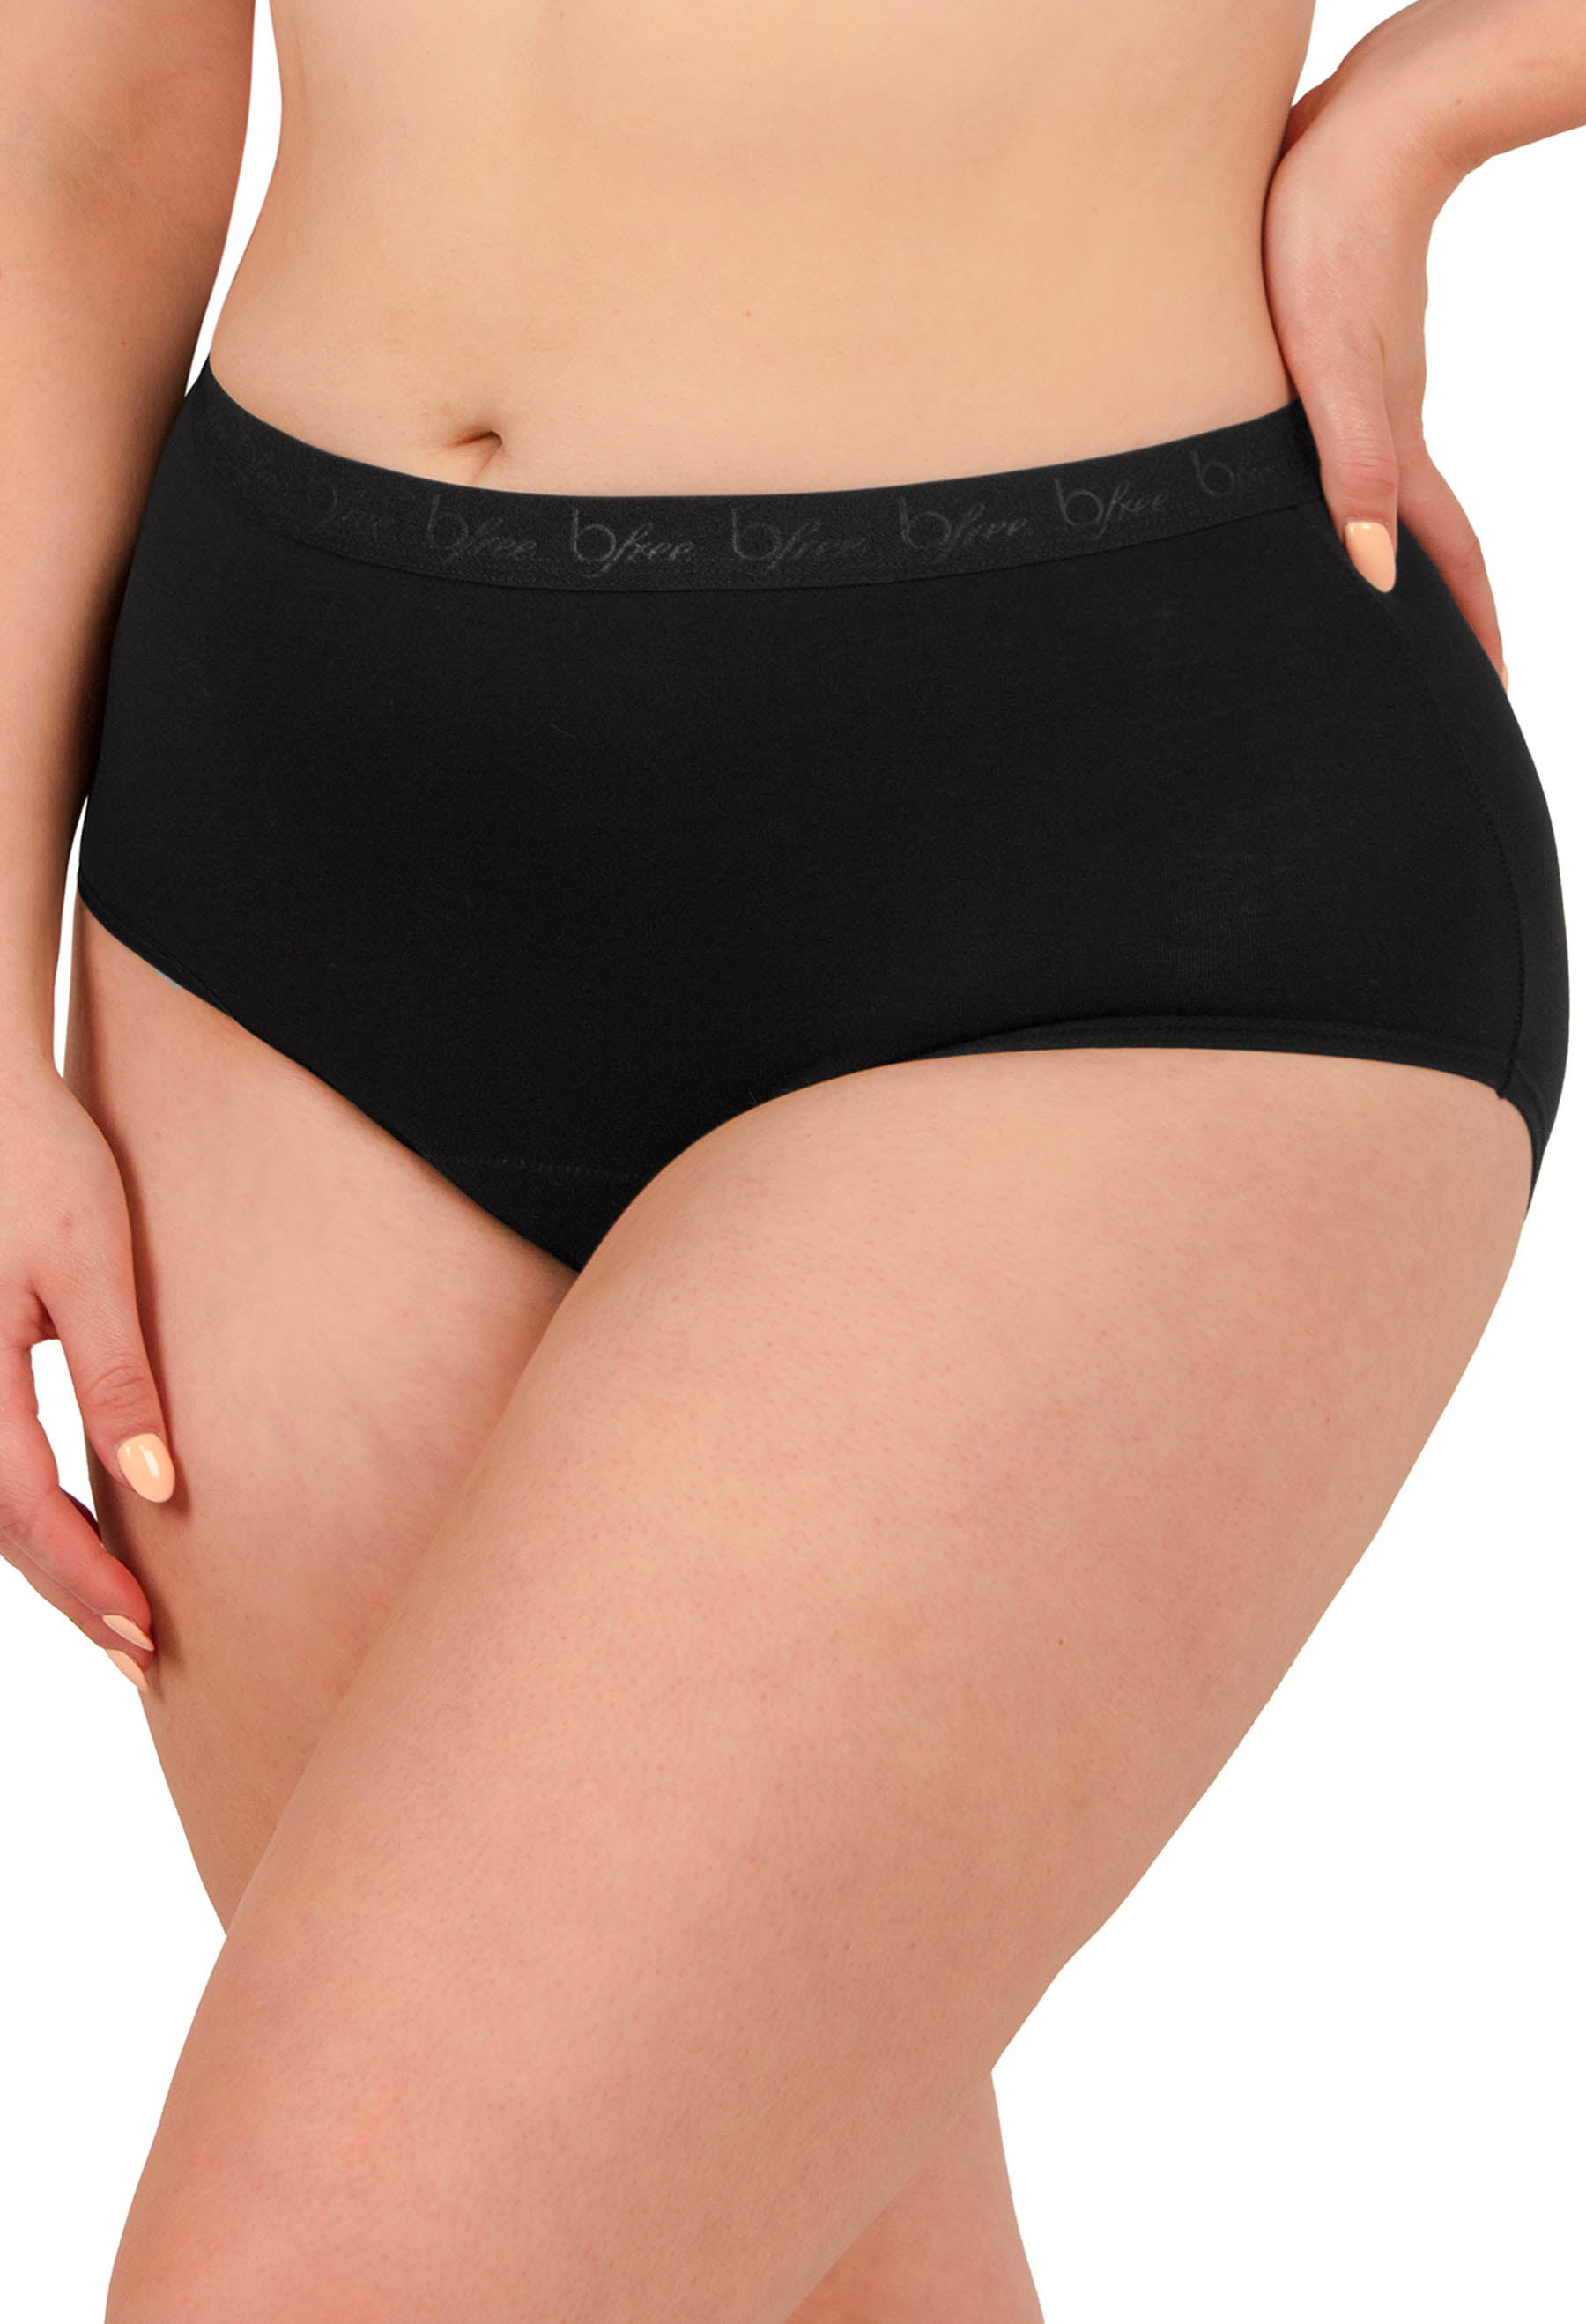 Pack of 2 Panties For Girls - Soft Skin & Black Cotton Underwear